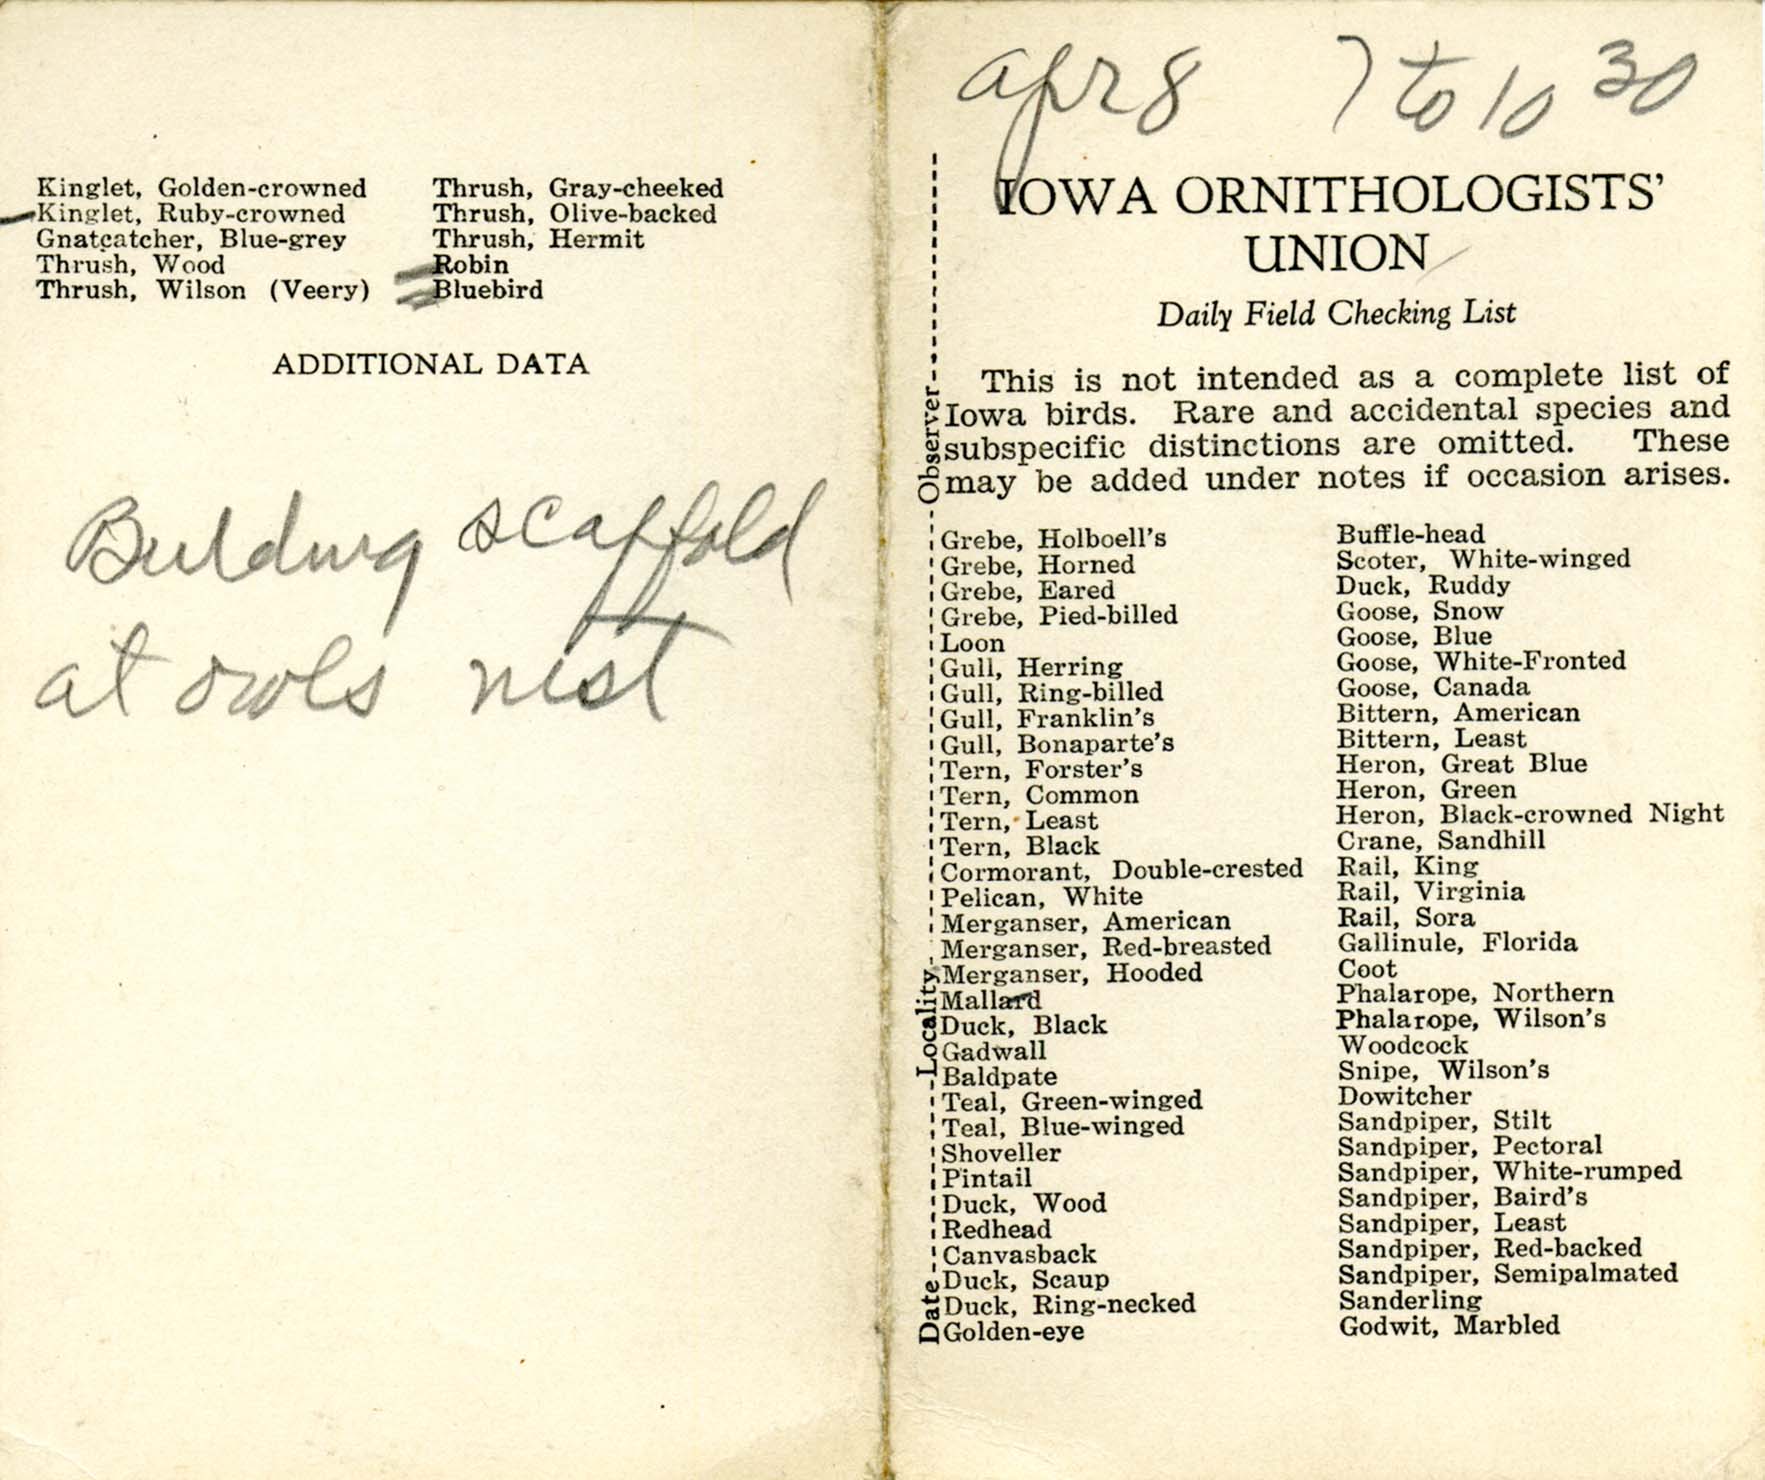 Daily field checking list, Walter Rosene,  April 8, 1932